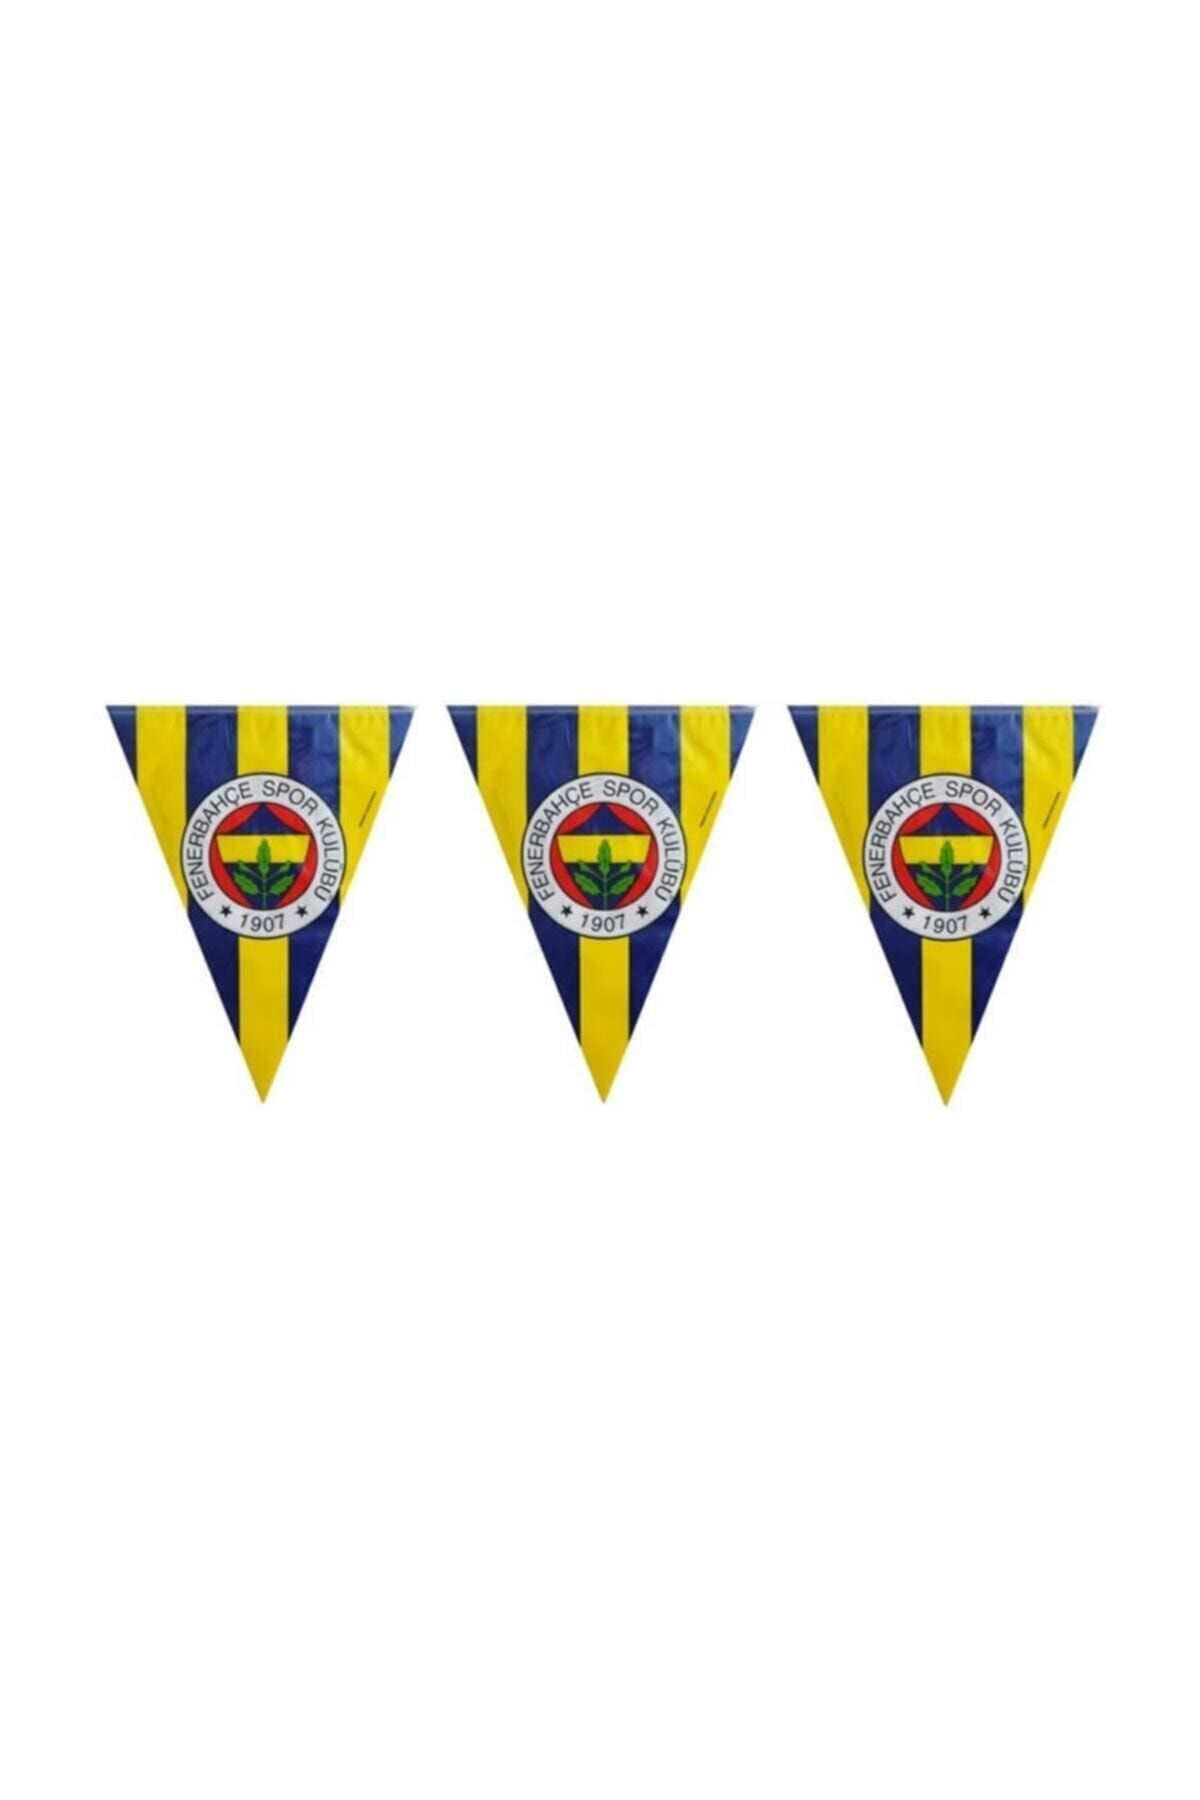 Fenerbahçe Fenerbahçe Üçgen Bayrak Flama - 3,60 mt